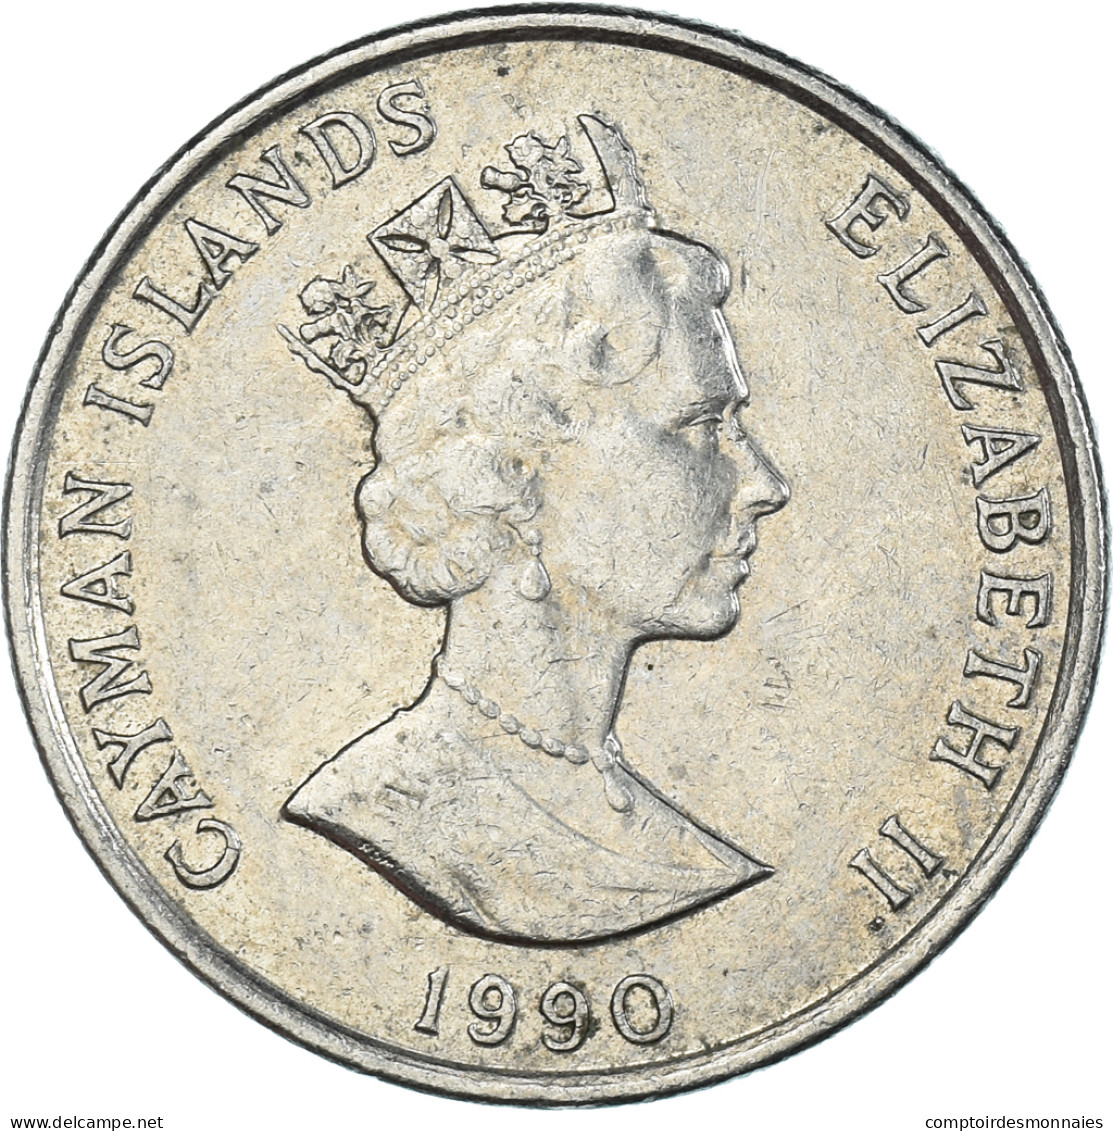 Monnaie, Îles Caïmans, 25 Cents, 1990 - Kaimaninseln